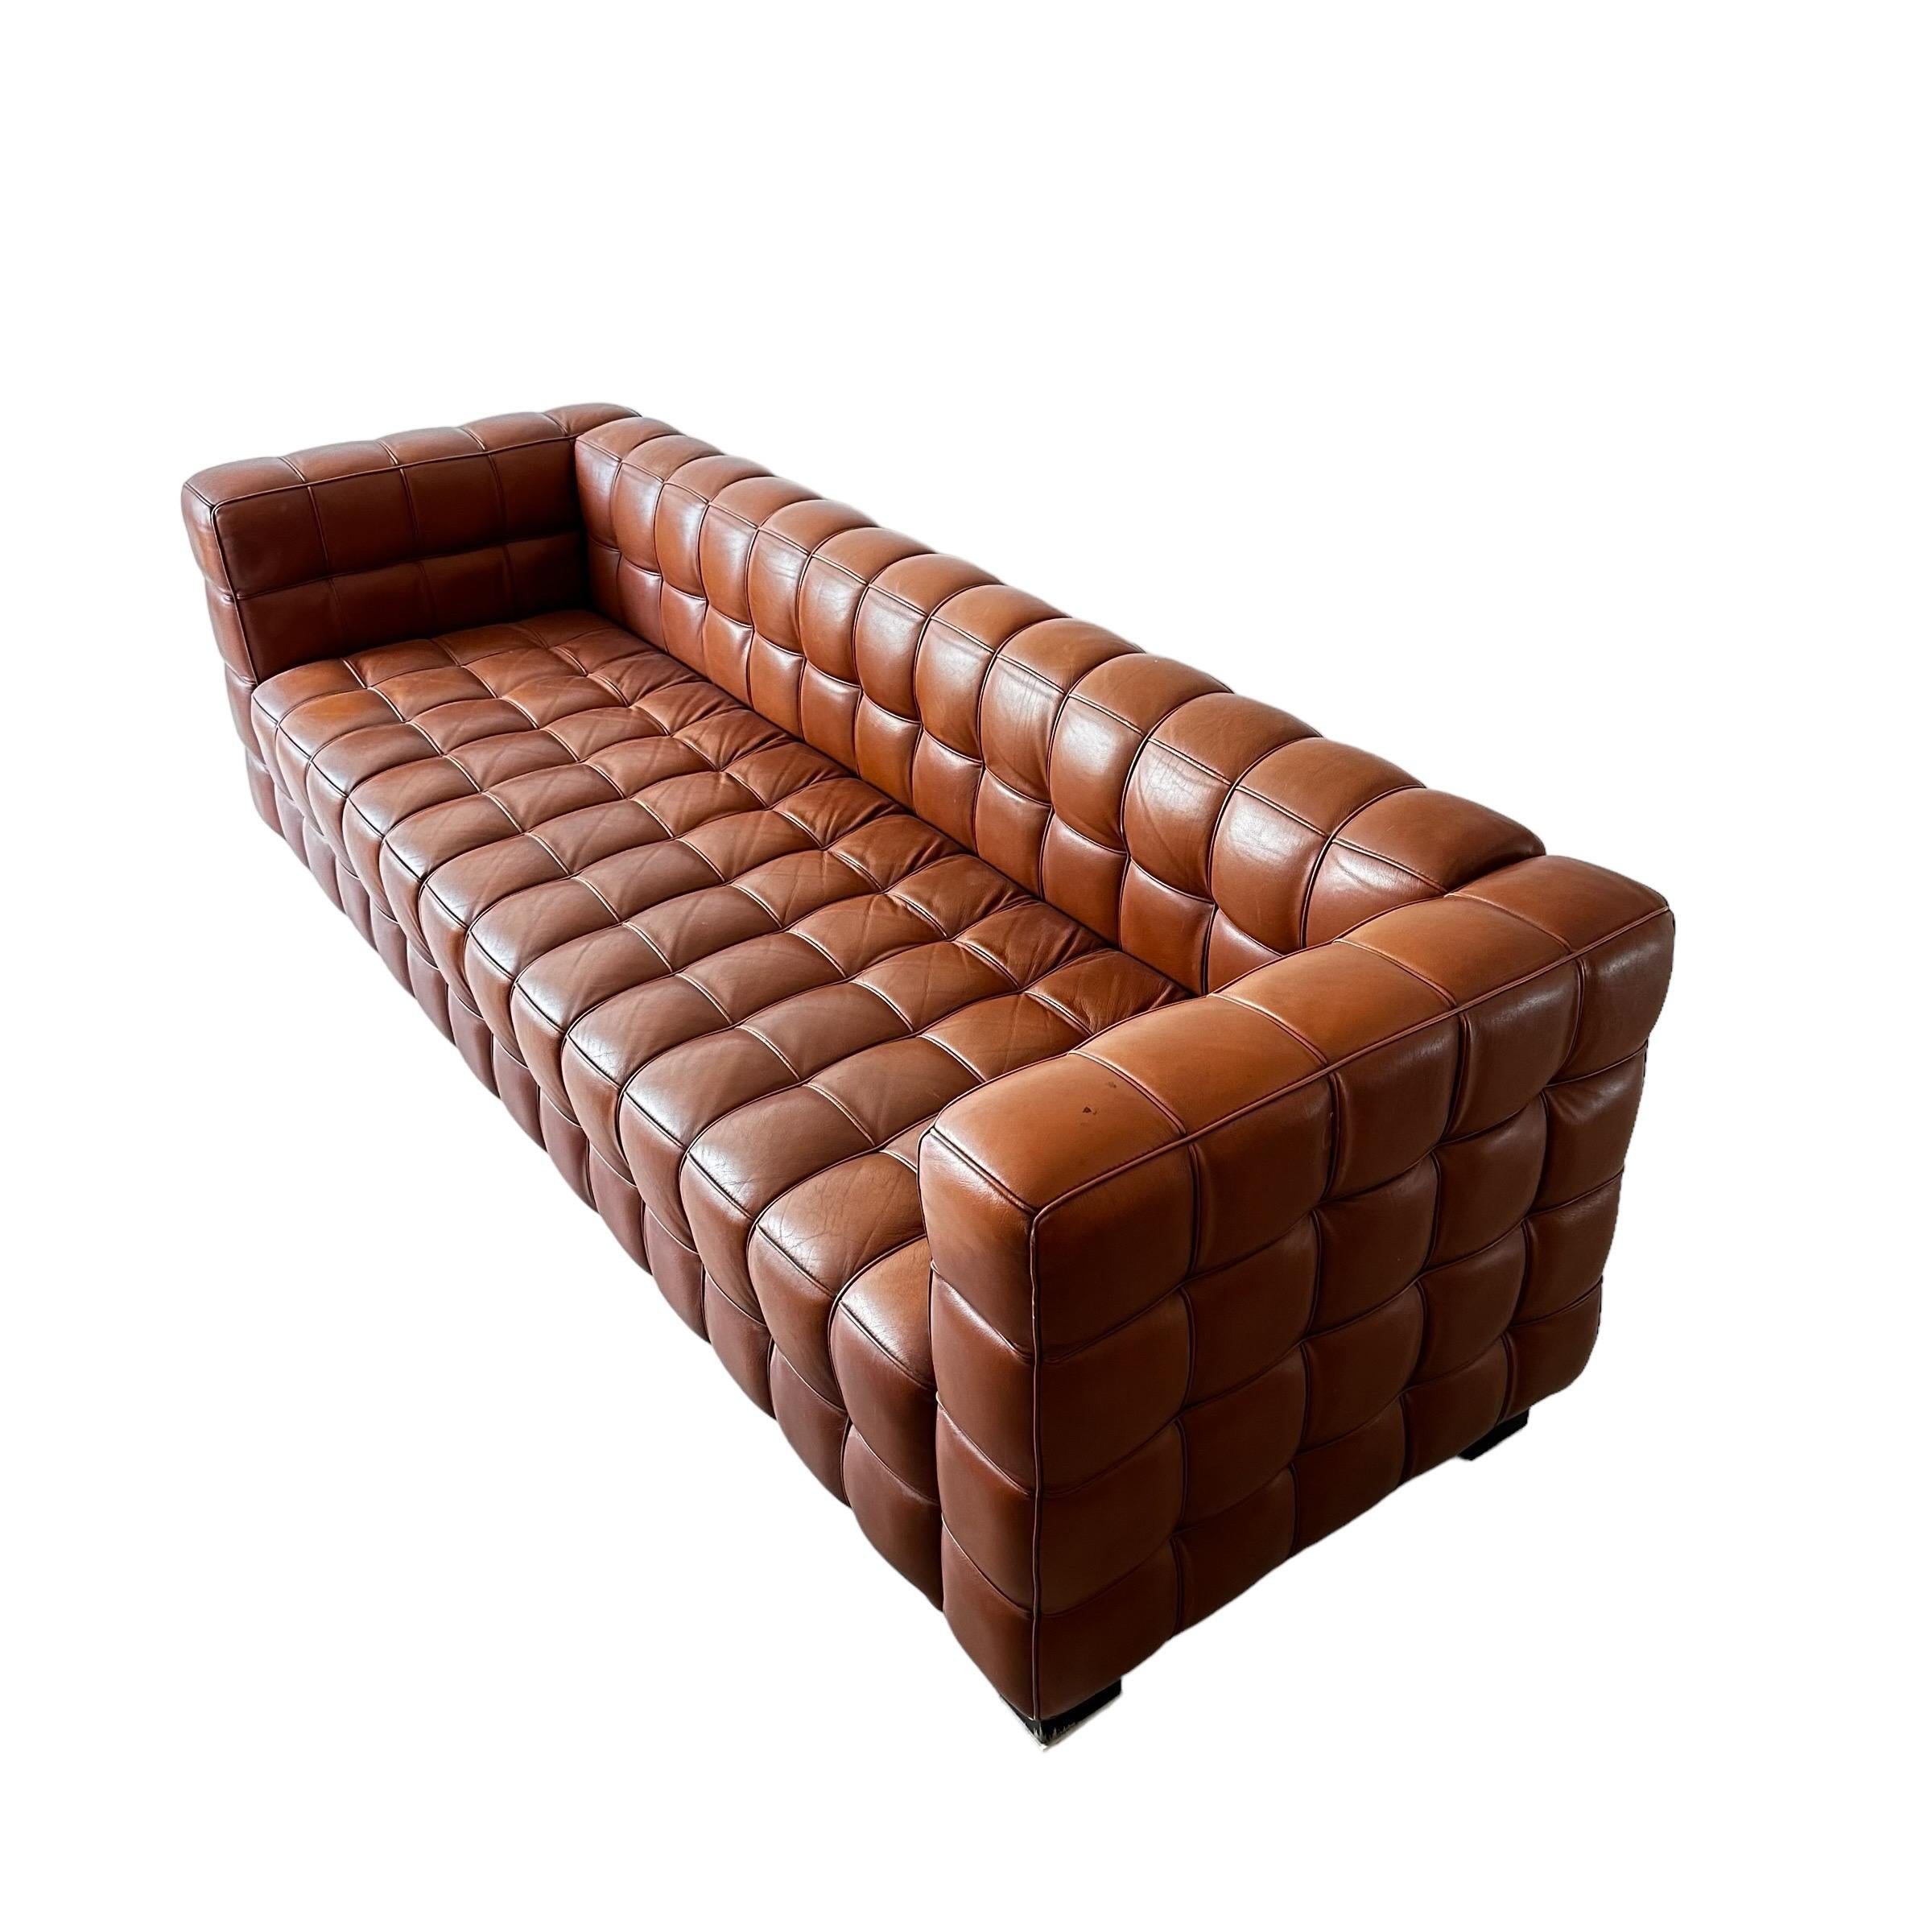 Jugendstil Josef Hoffmann Kubus Sofa in Patinated Original Cognac Leather by Wittmann For Sale